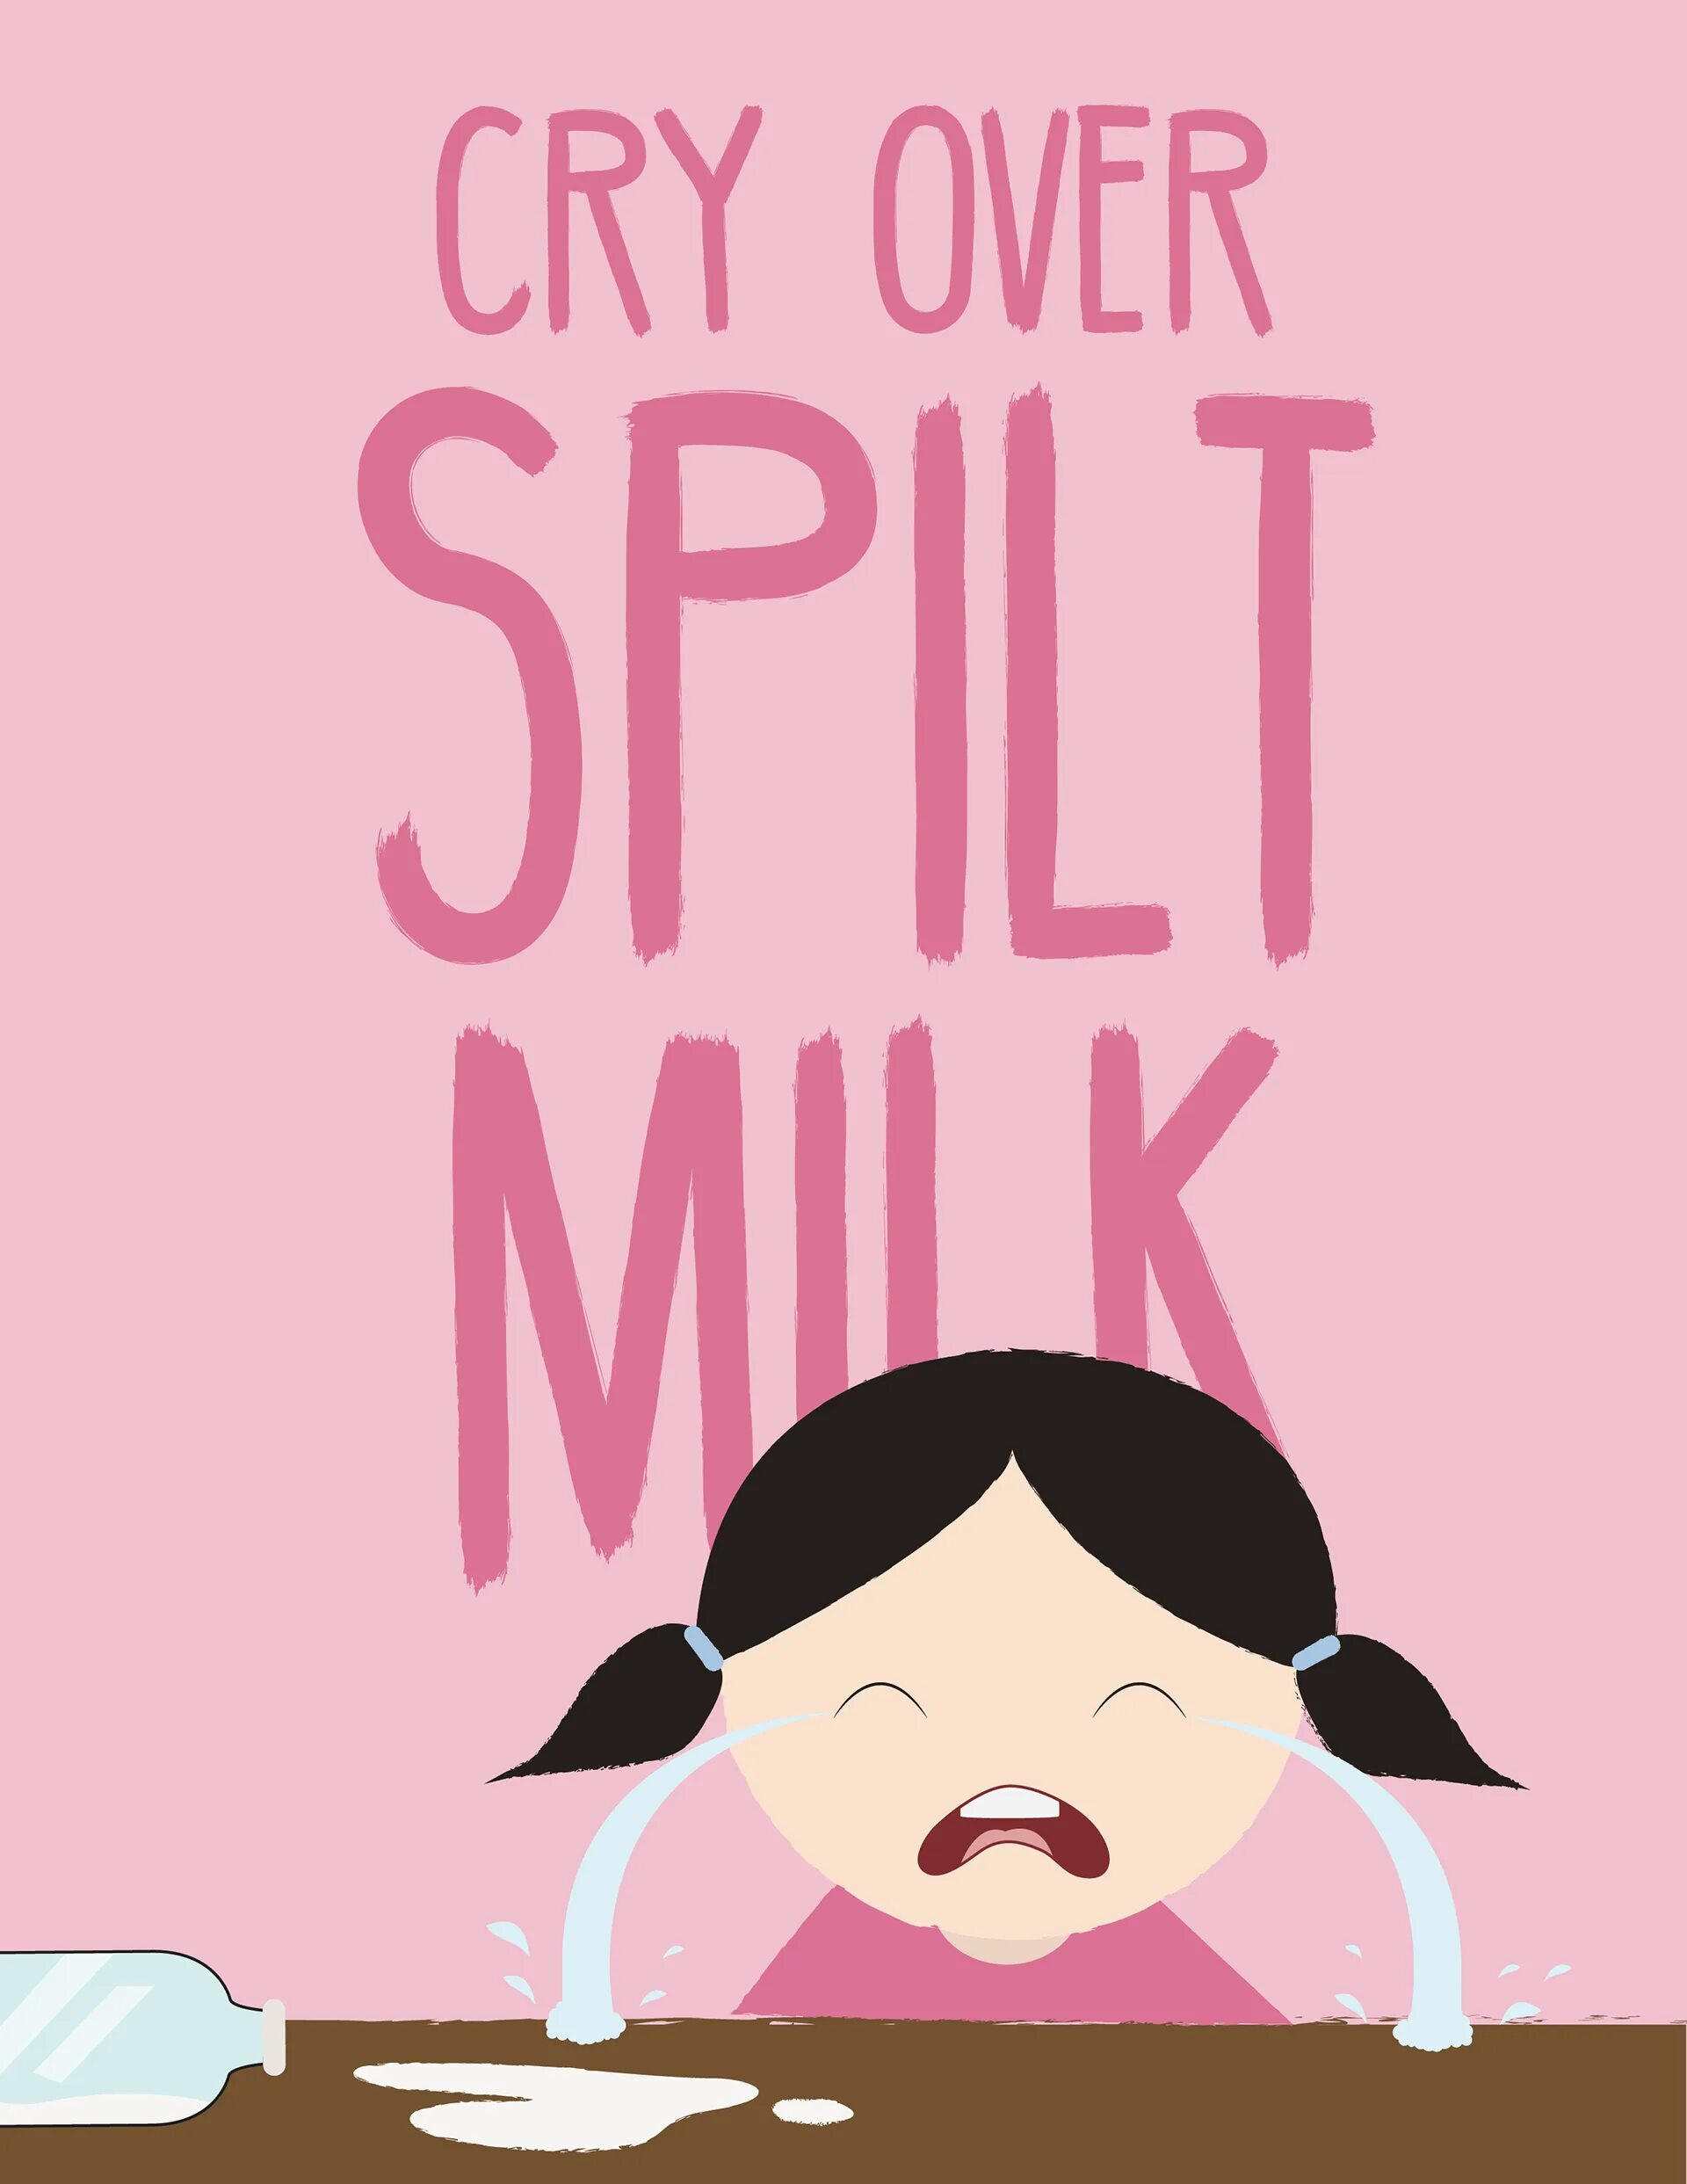 Идиомы crying over spilt Milk. Cry over spilt Milk идиома. Spilt Milk идиома. Crying over spilt Milk картинка. Crying over spilt milk идиома перевод